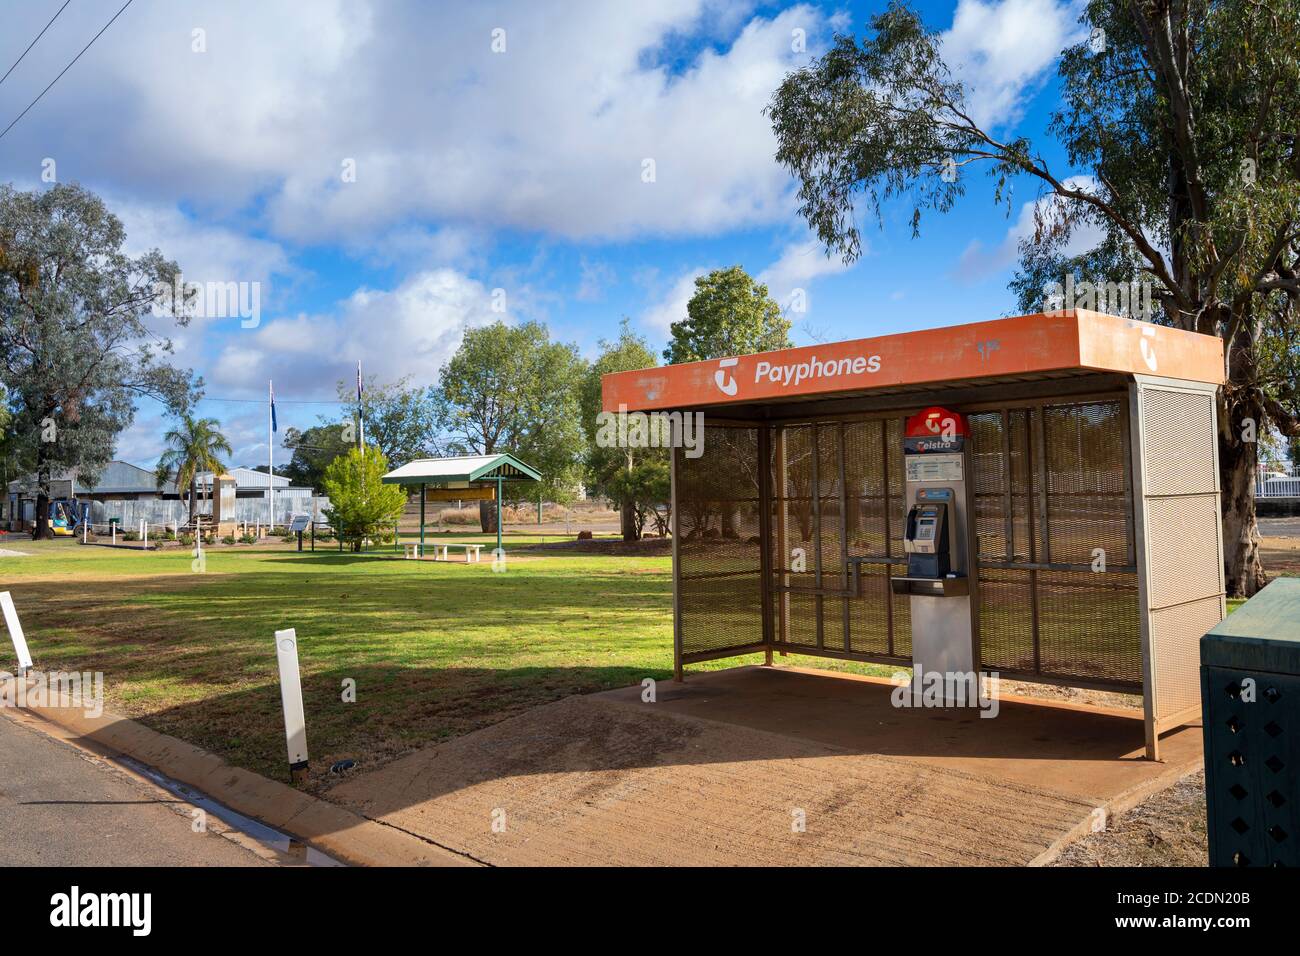 Telephone box in remote country town, Morven, Queensland, Australia Stock Photo